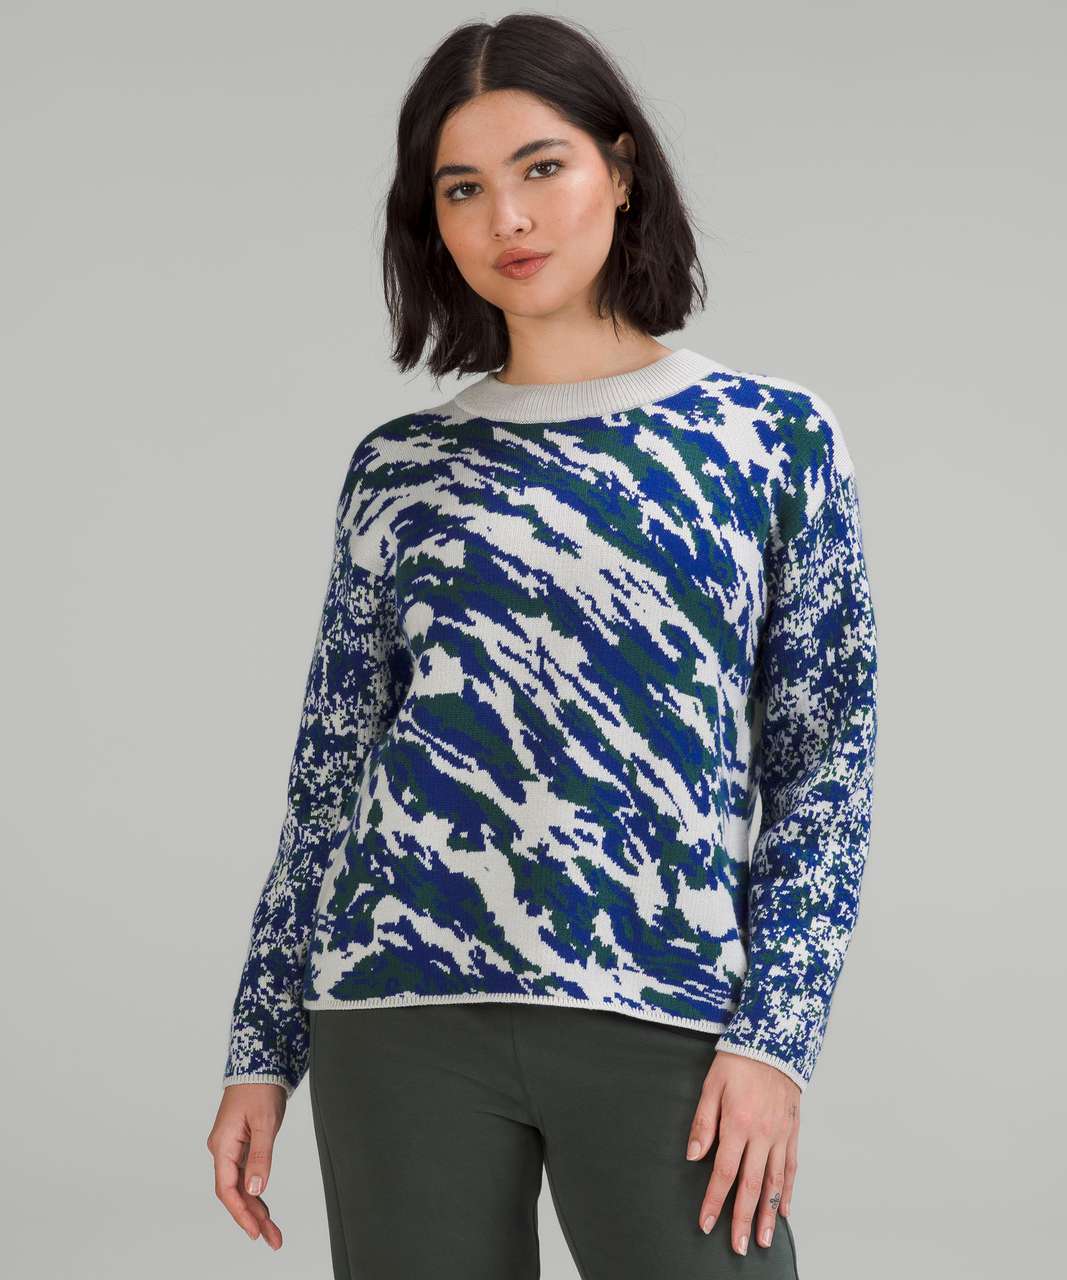 Lululemon Wool-Blend Patterned Sweater - Vapor / Psychic / Green Jasper